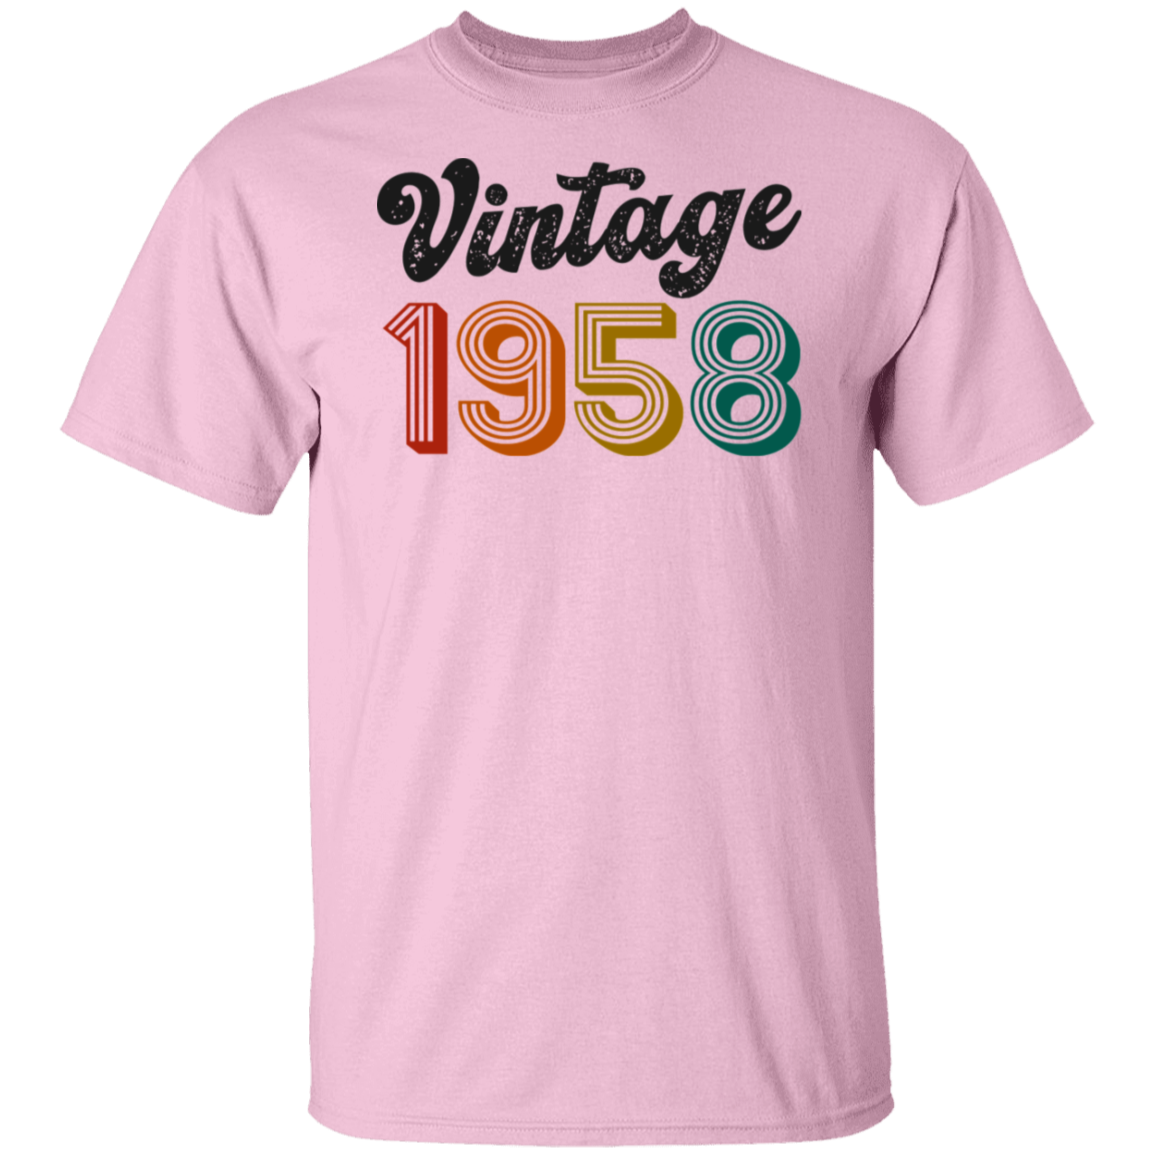 Vintage 1958 T-Shirt